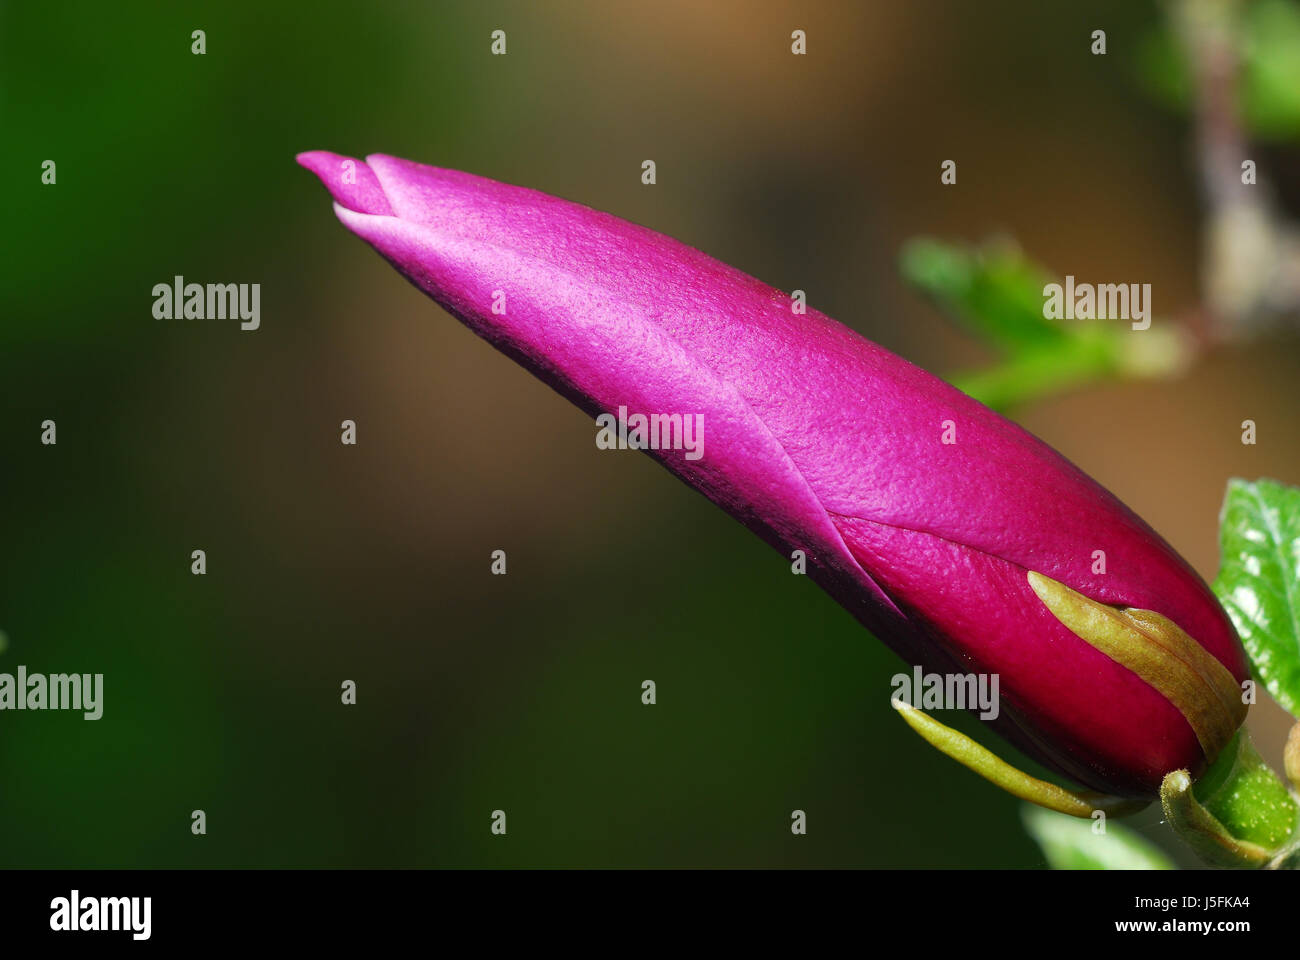 plant bloom blossom flourish flourishing blossoms coloured purple magnolia Stock Photo